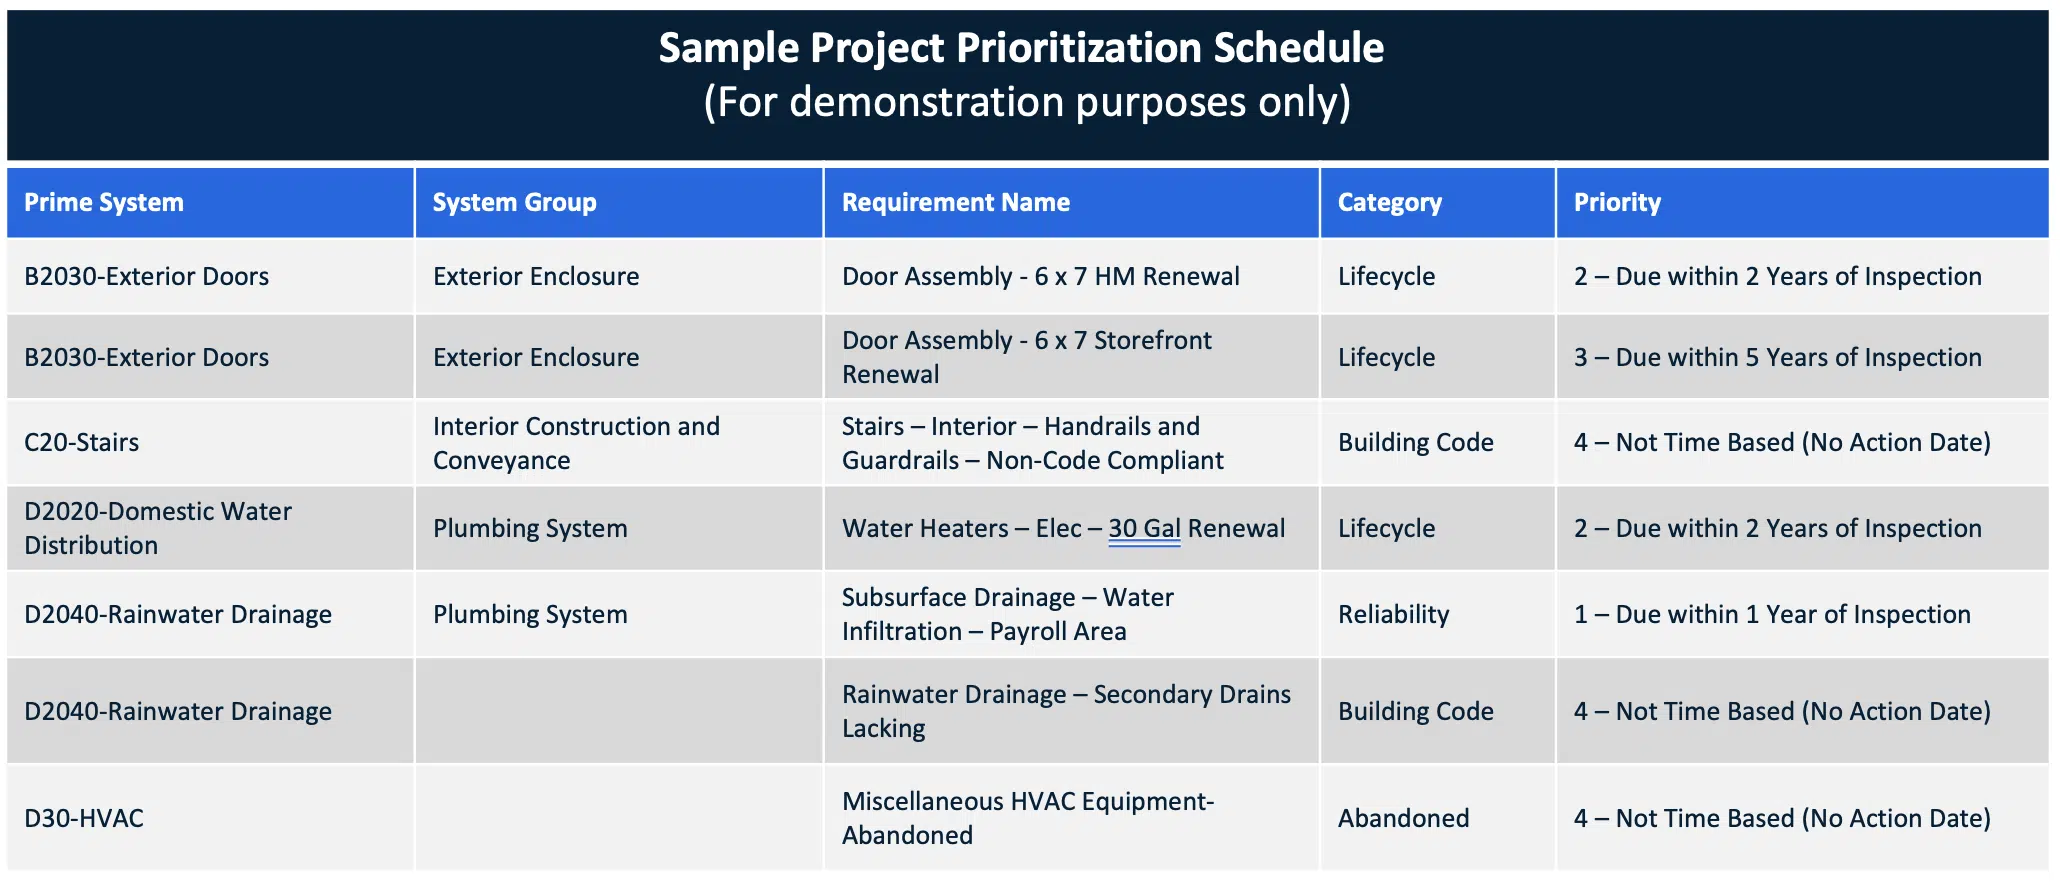 Sample Project Prioritization Schedule